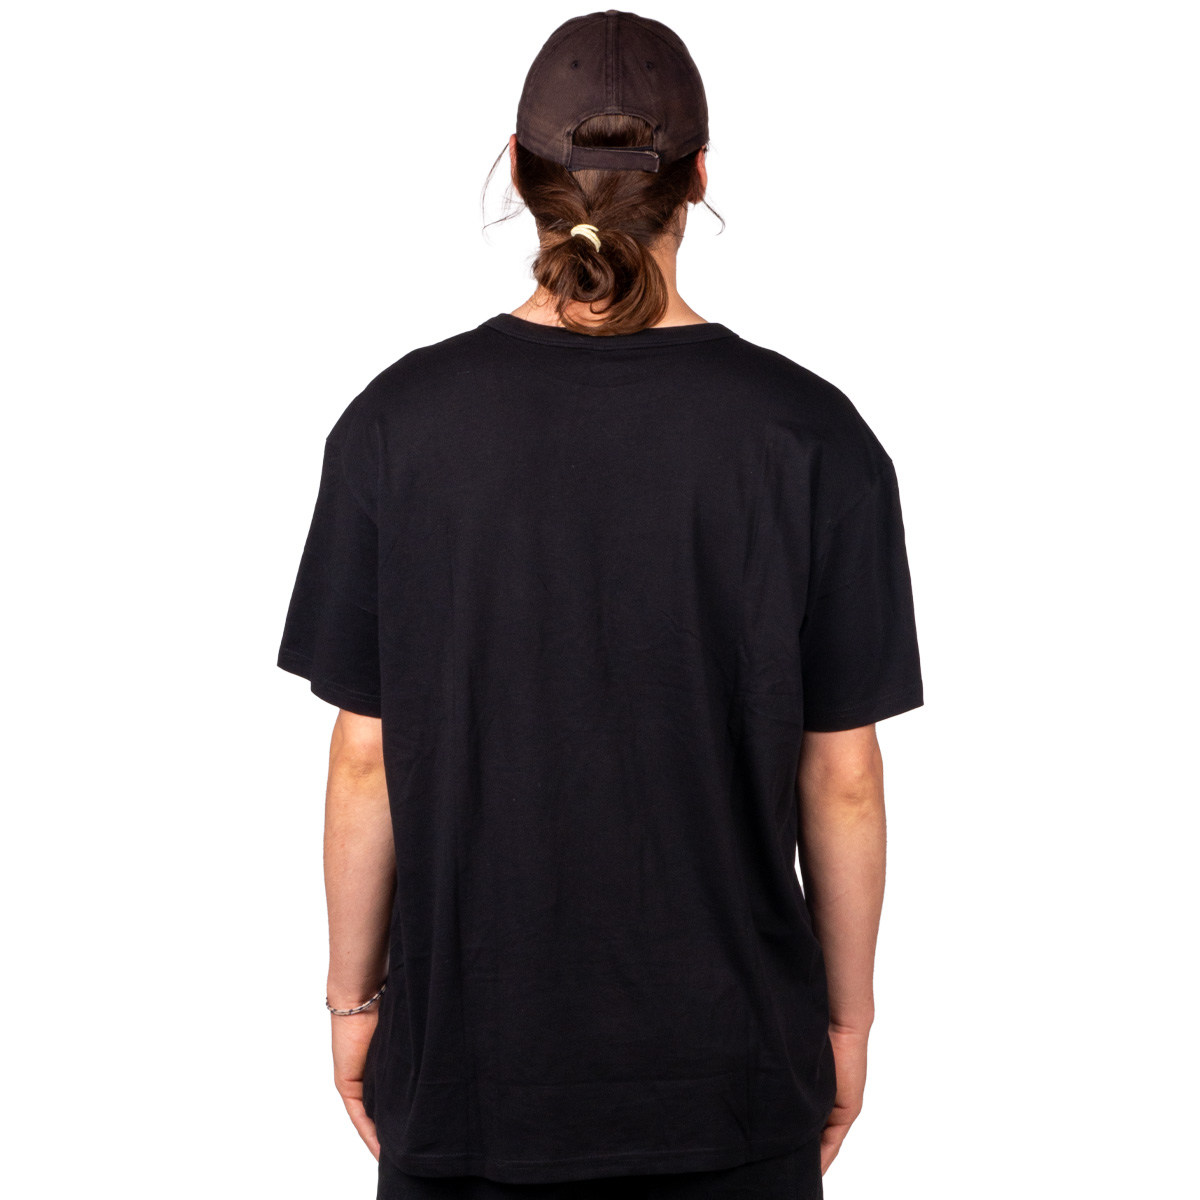 Feedmysoul T-Shirt Colour Emb (black)